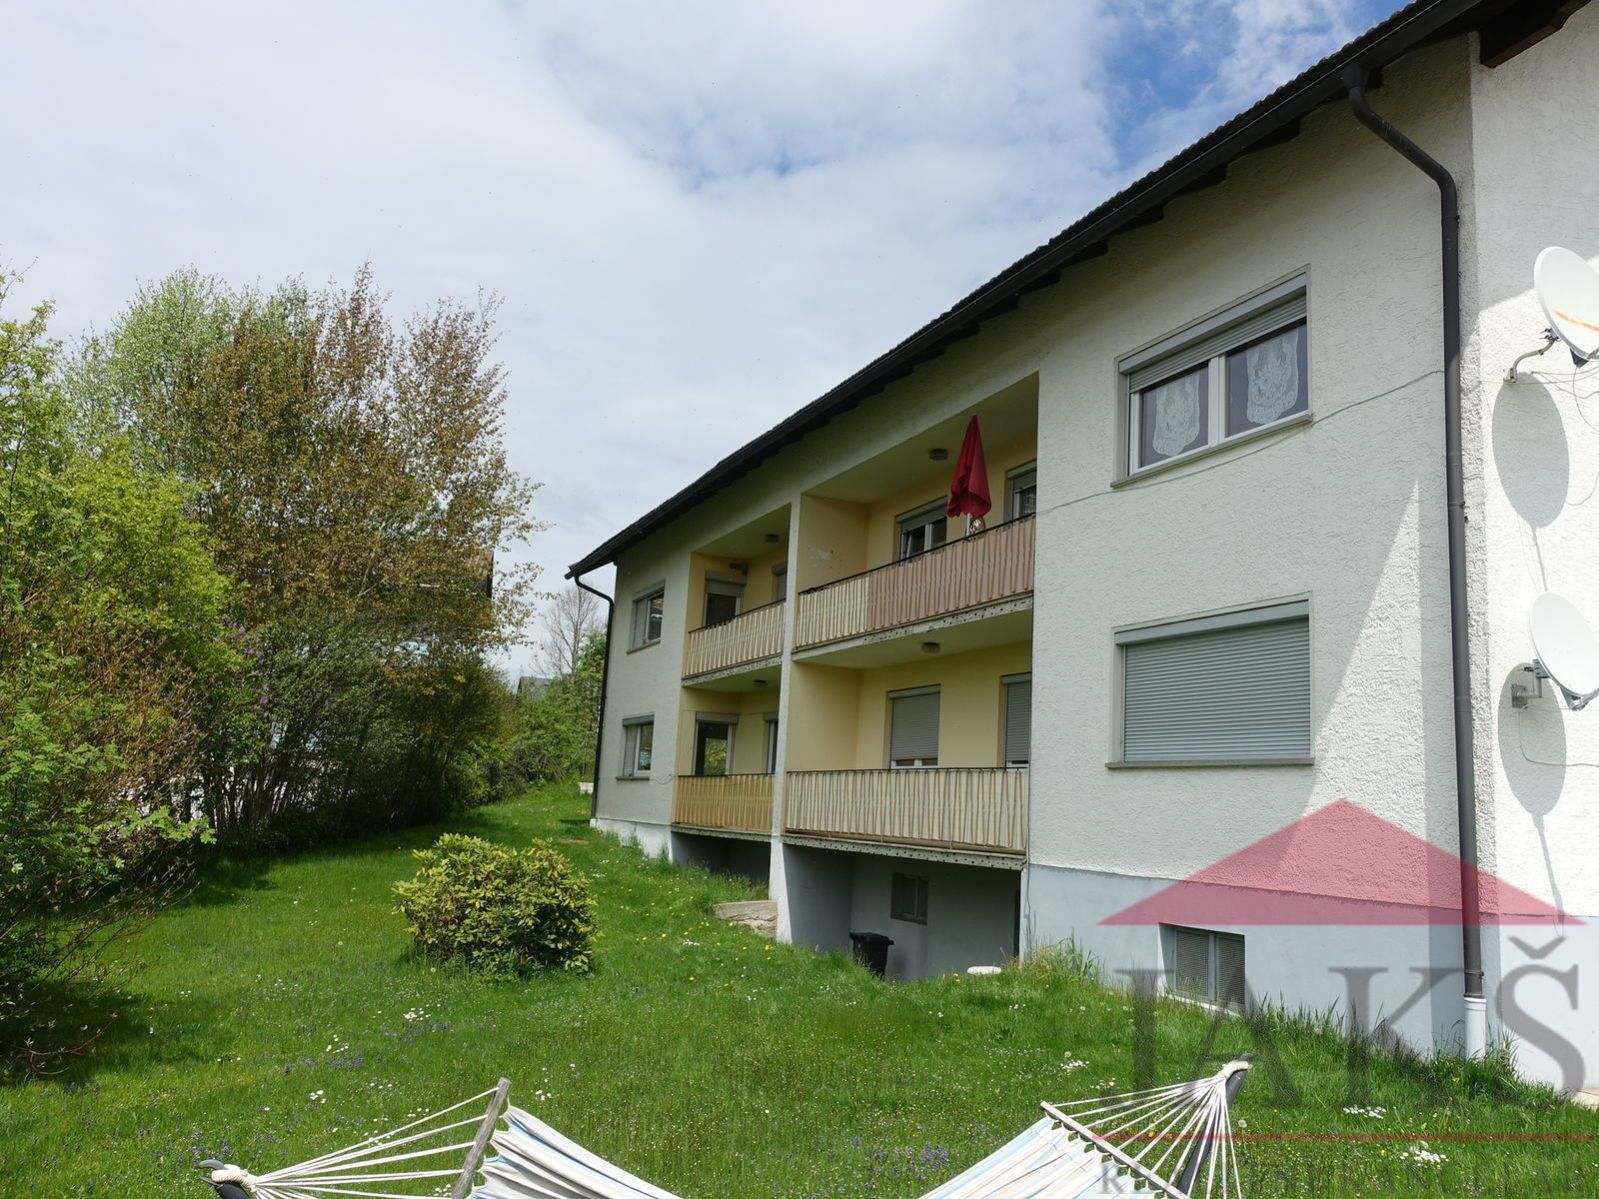 Frauenau - Grubenweg; dům s 6 byty (podl. plocha: 426 m2) garáží a zahradou, obrázek č. 3